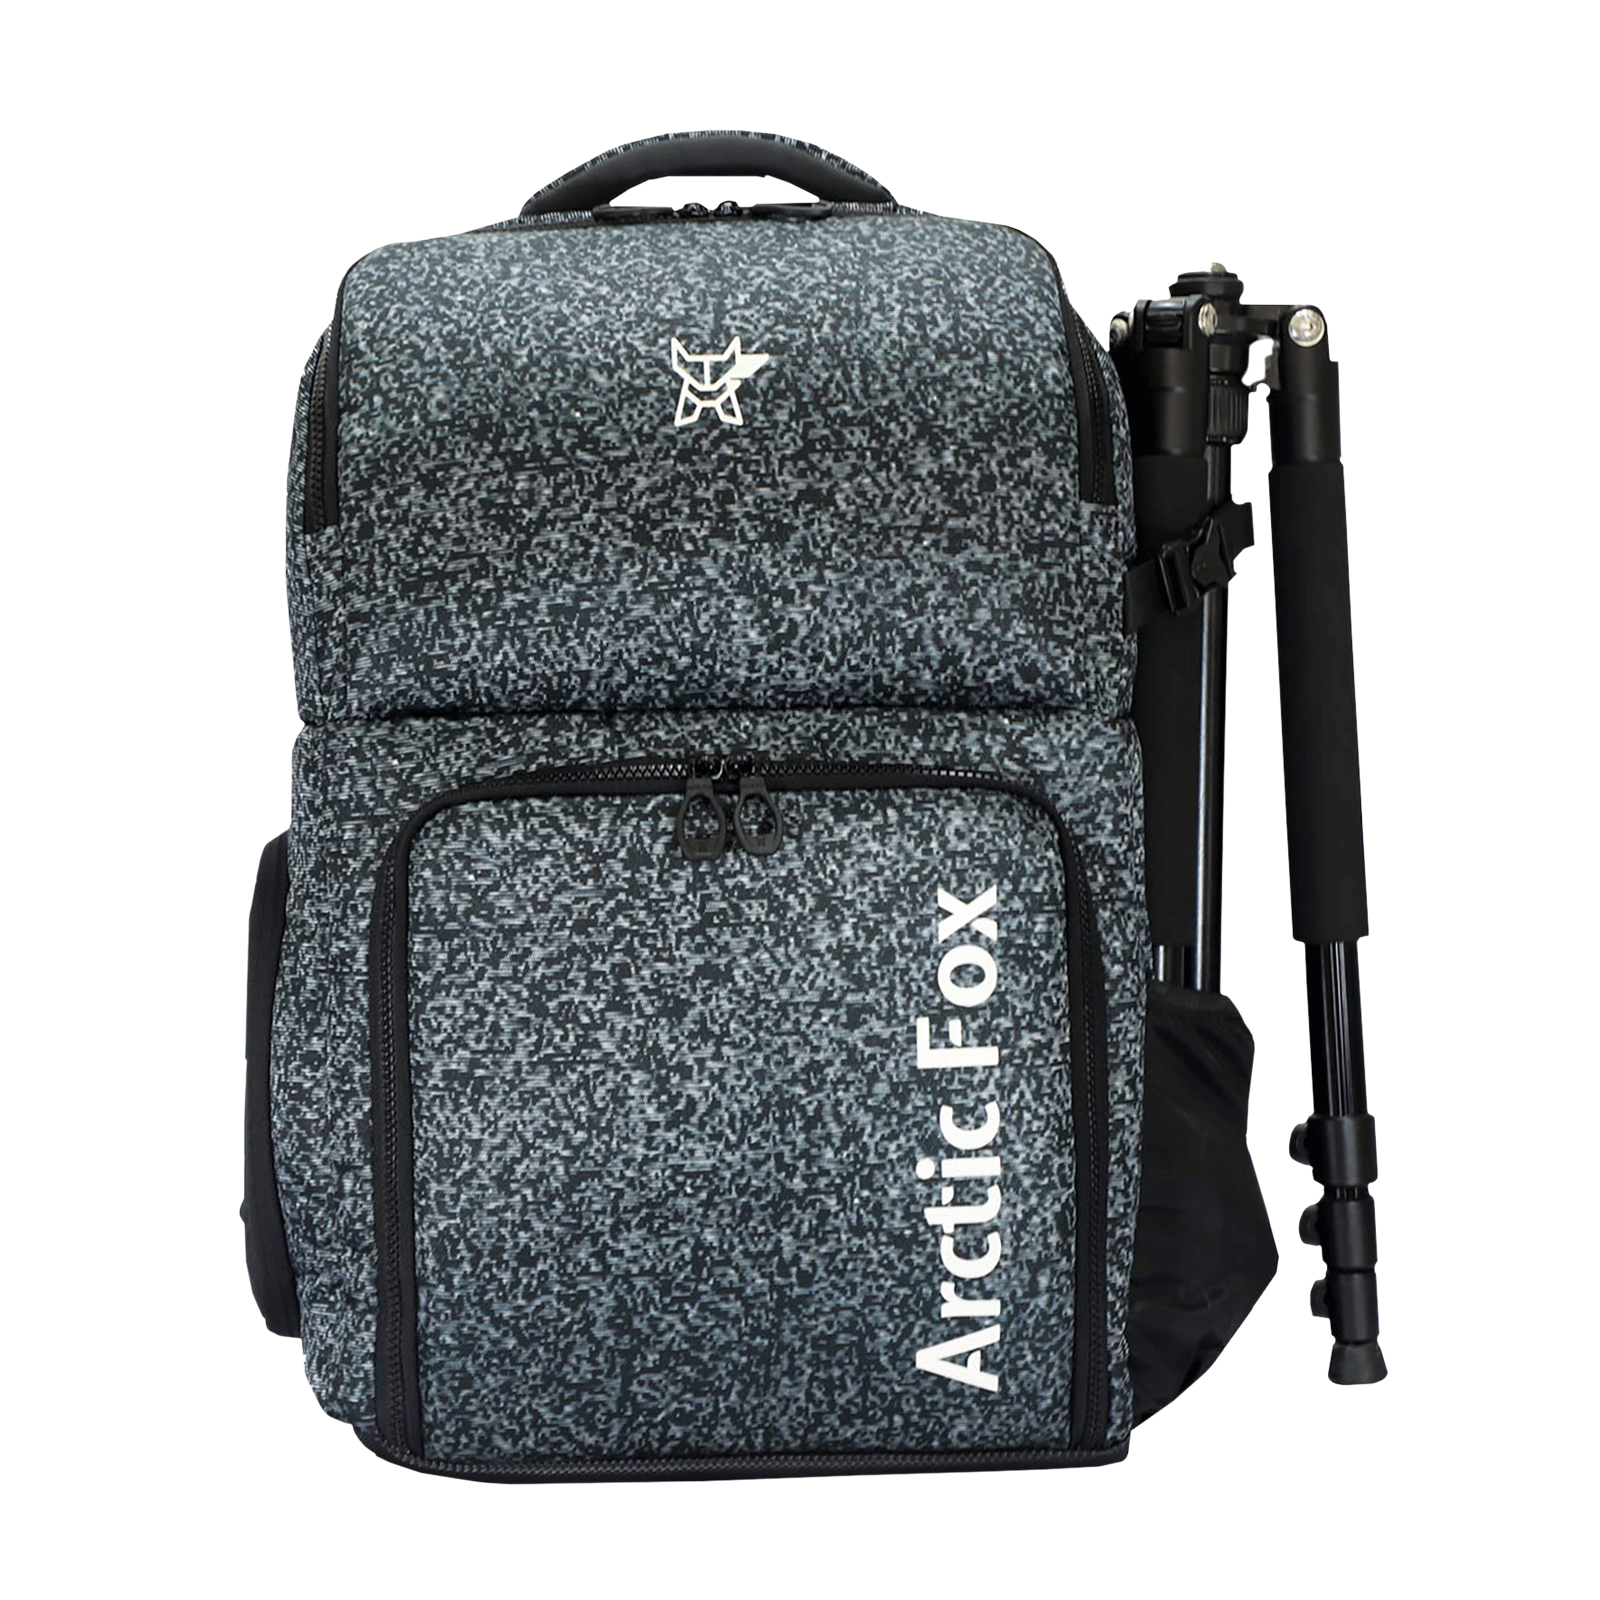 FOX TALBOT CAMERA bag with shoulder strap £14.00 - PicClick UK